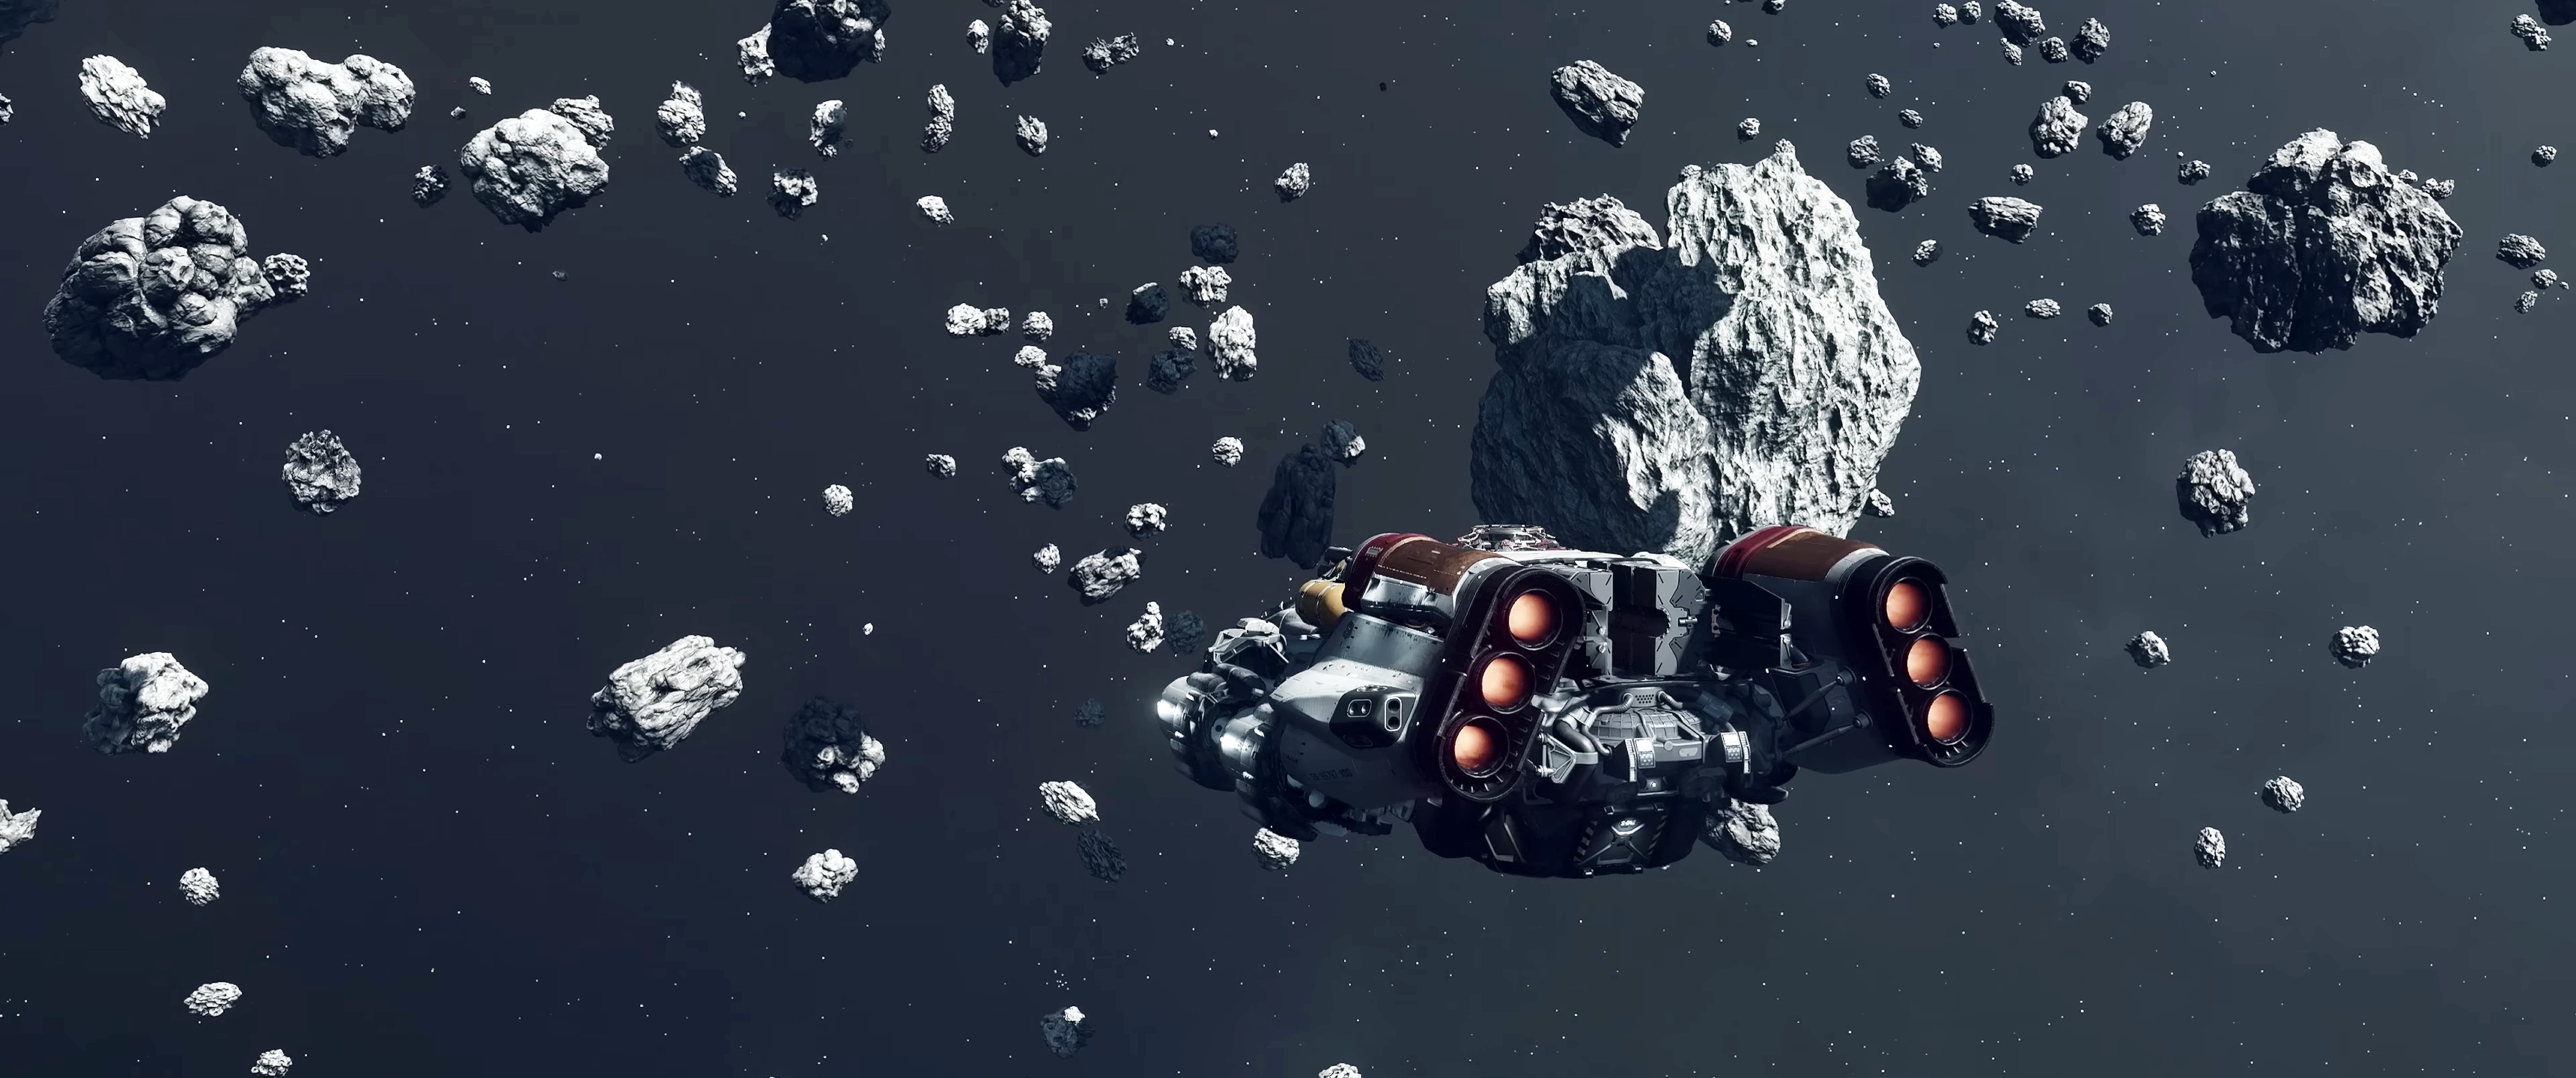 General 3440x1440 Starfield (video game) Bethesda Softworks space video games spaceship asteroid stars CGI